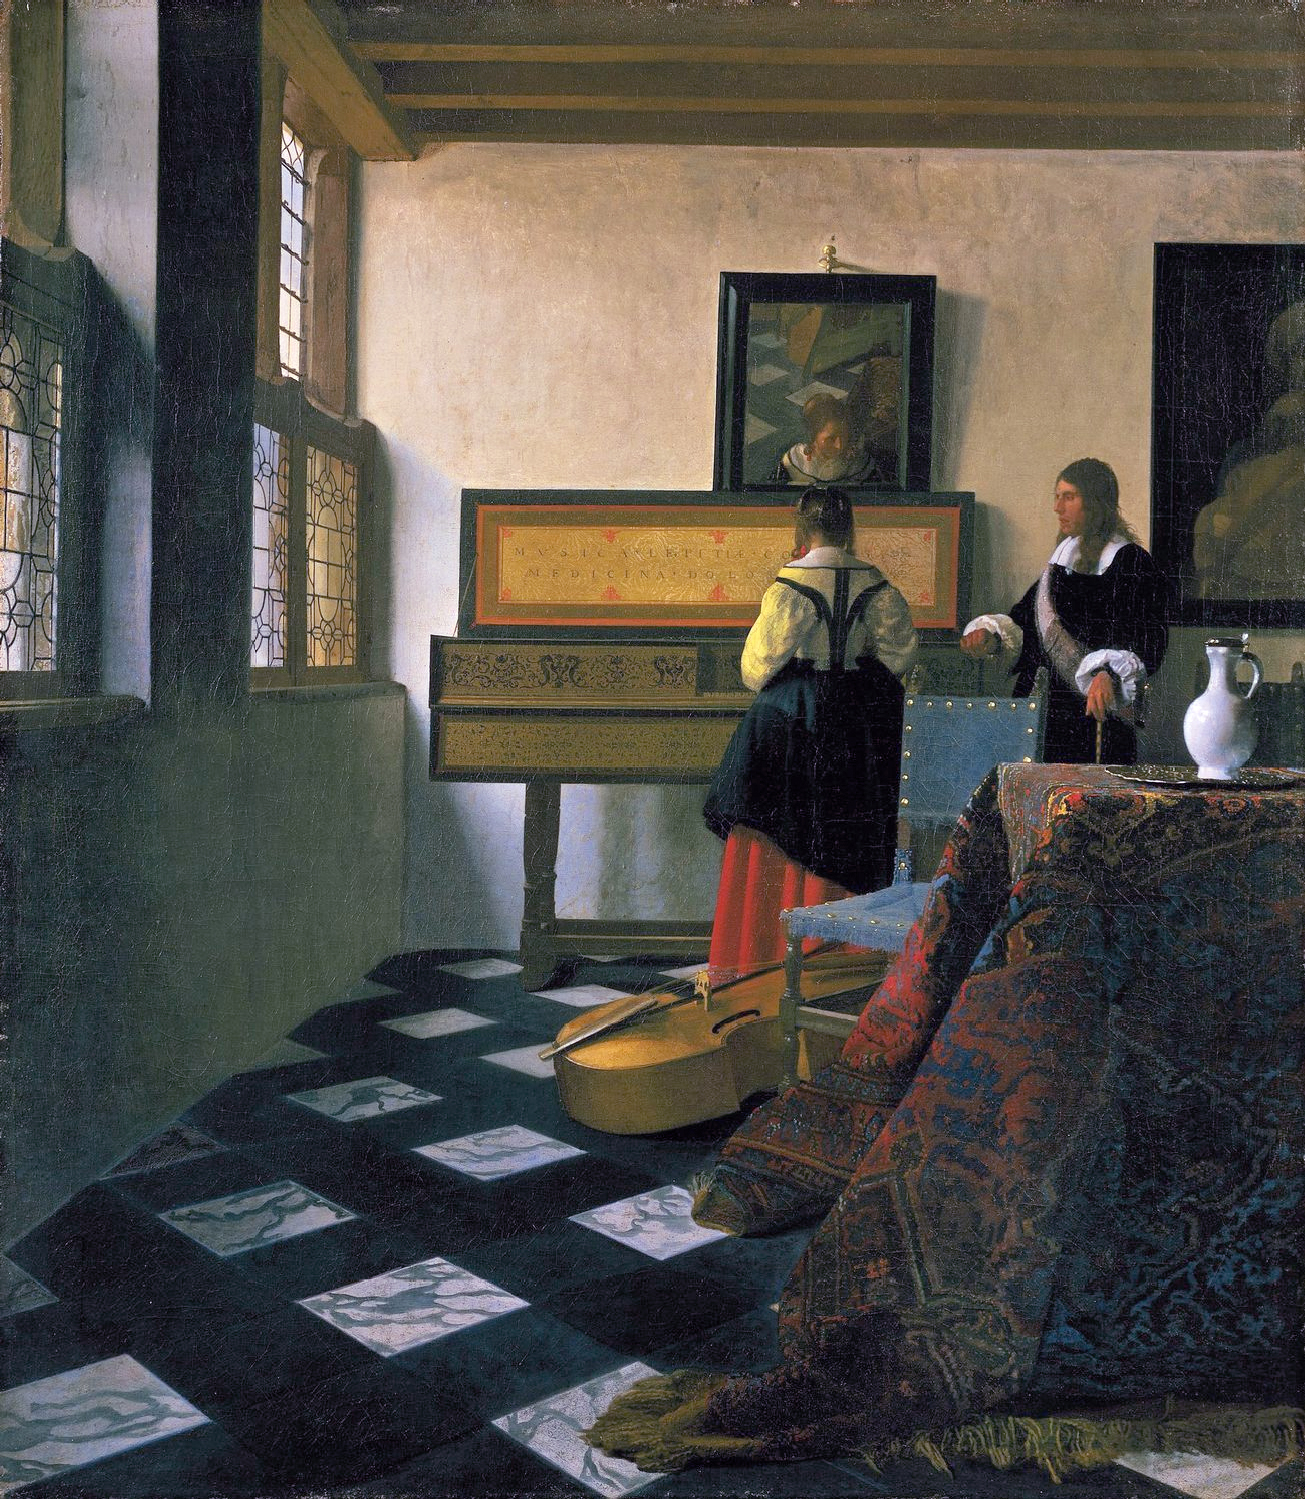 Урок музыки by Johannes Vermeer - 1662 - 74.6 cm × 64.1 cm 